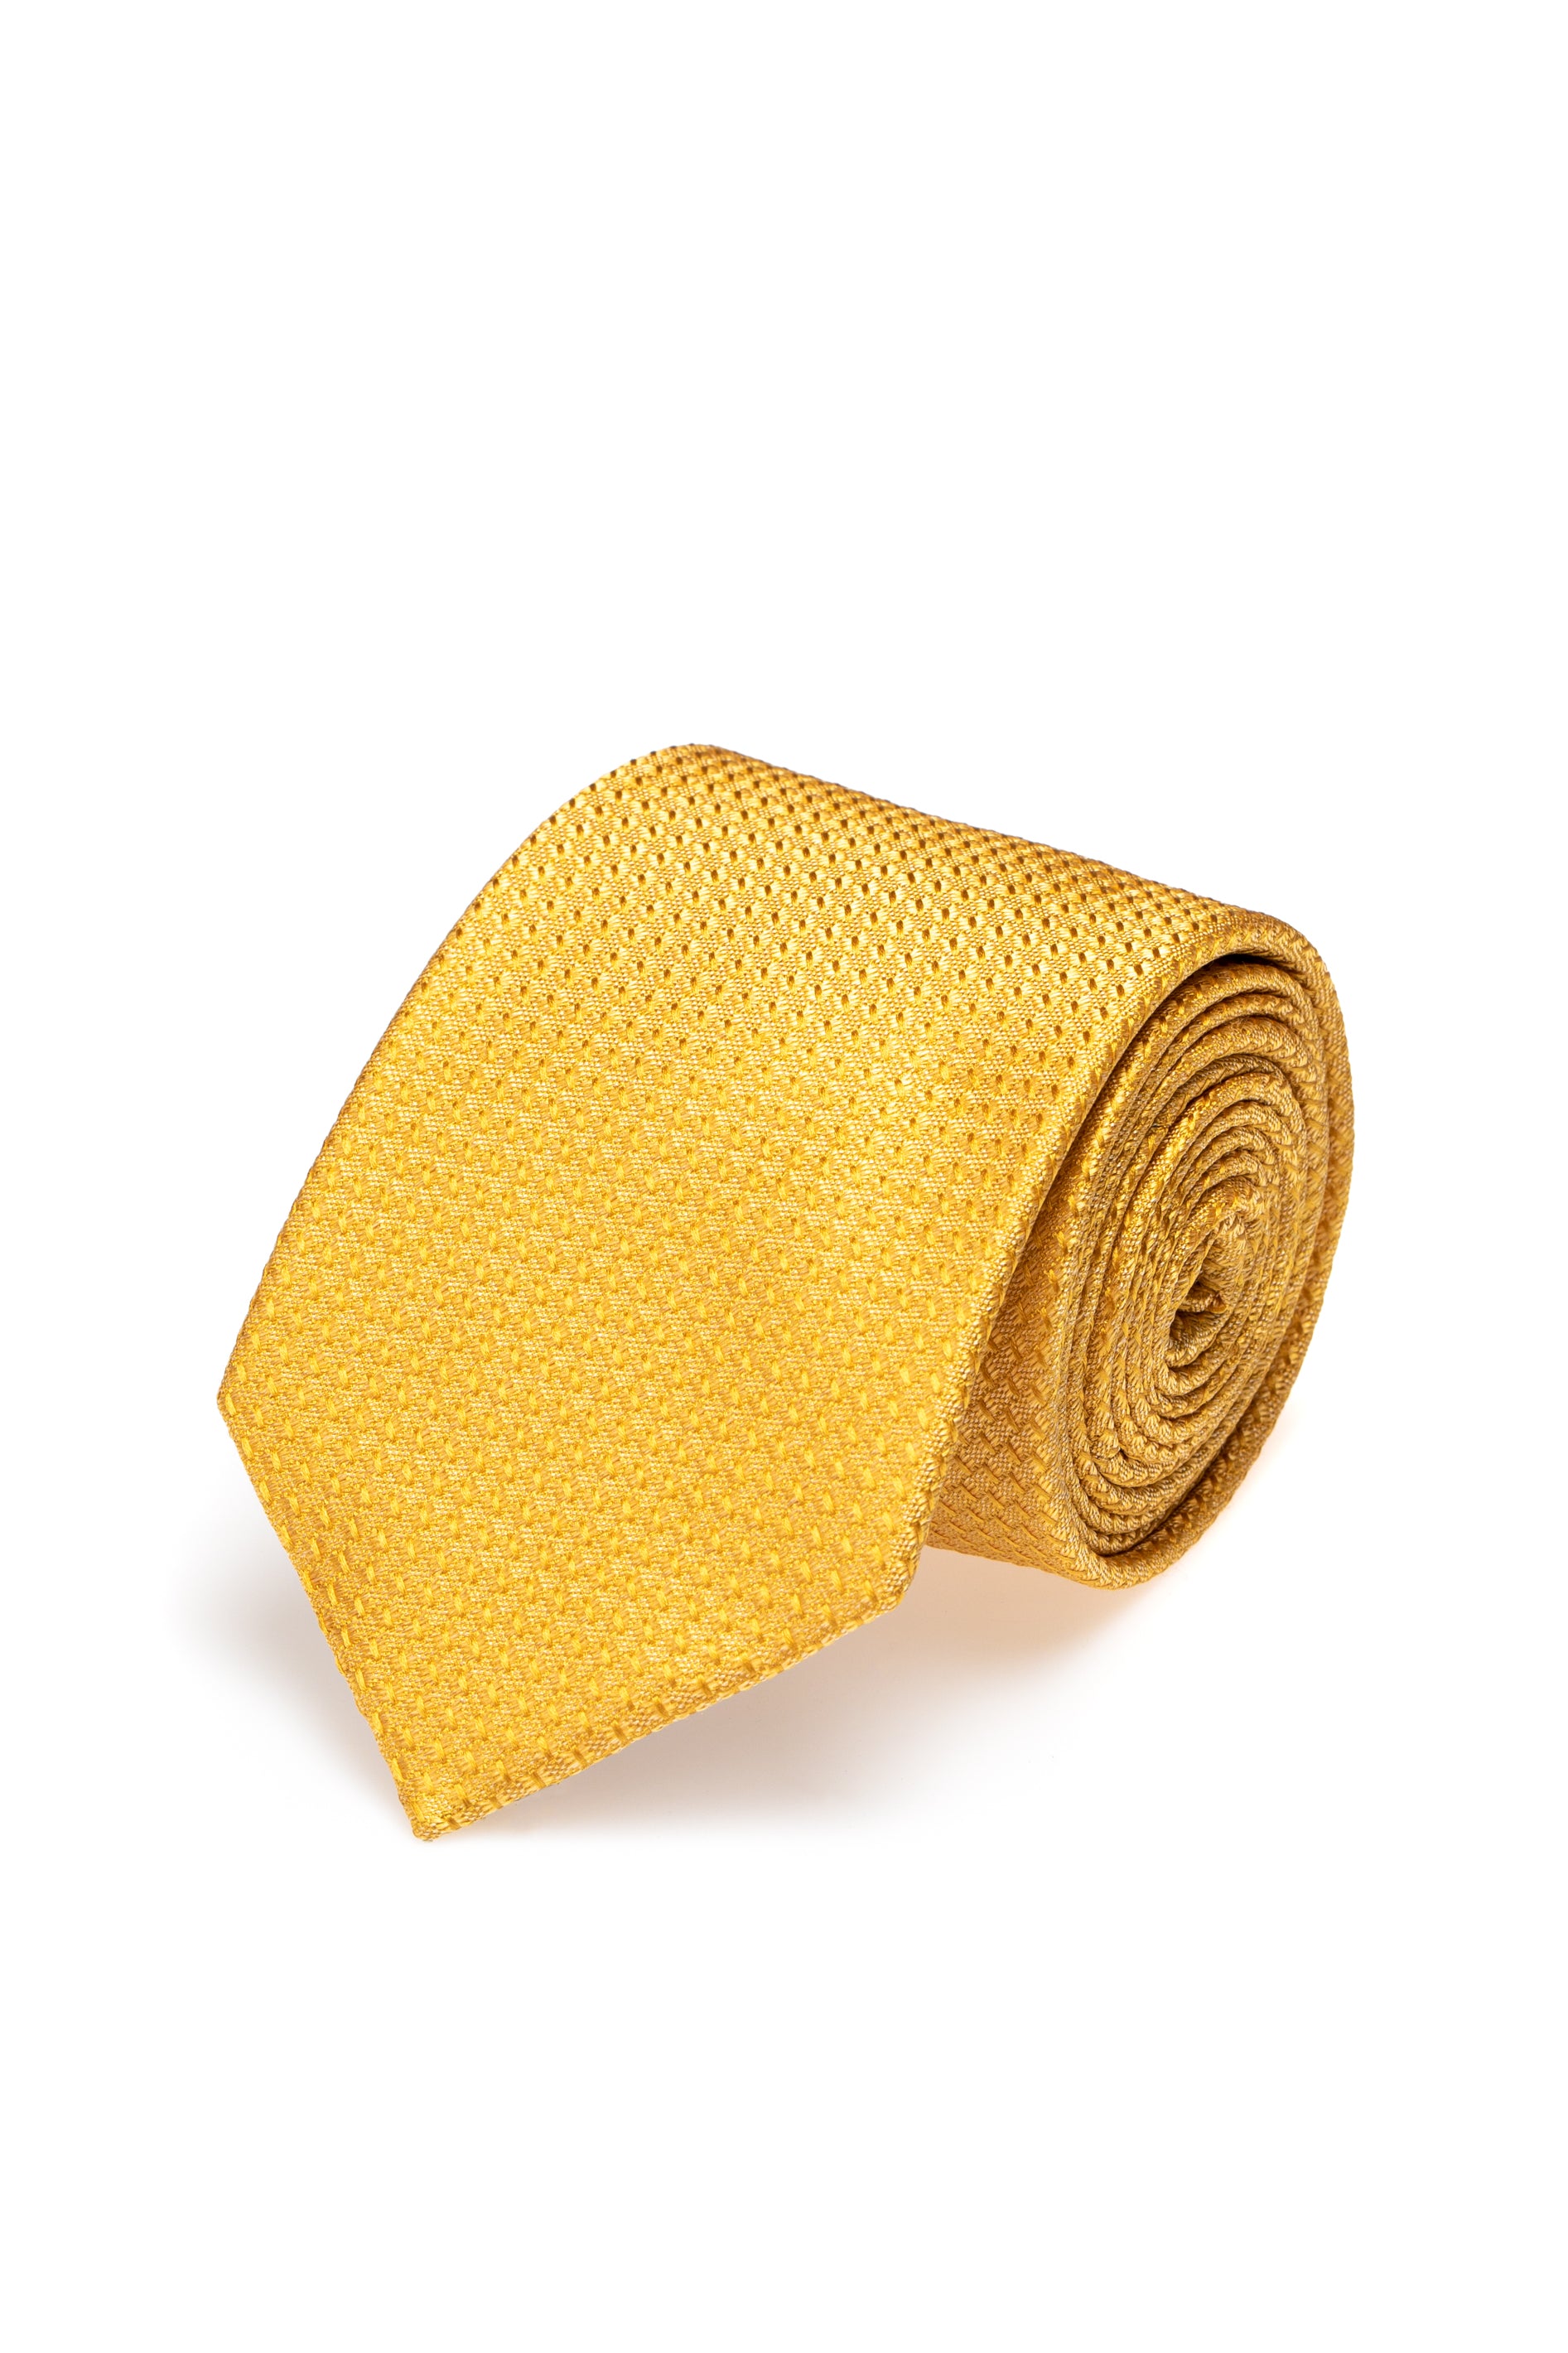 Cravatta in seta gialla testurizzata